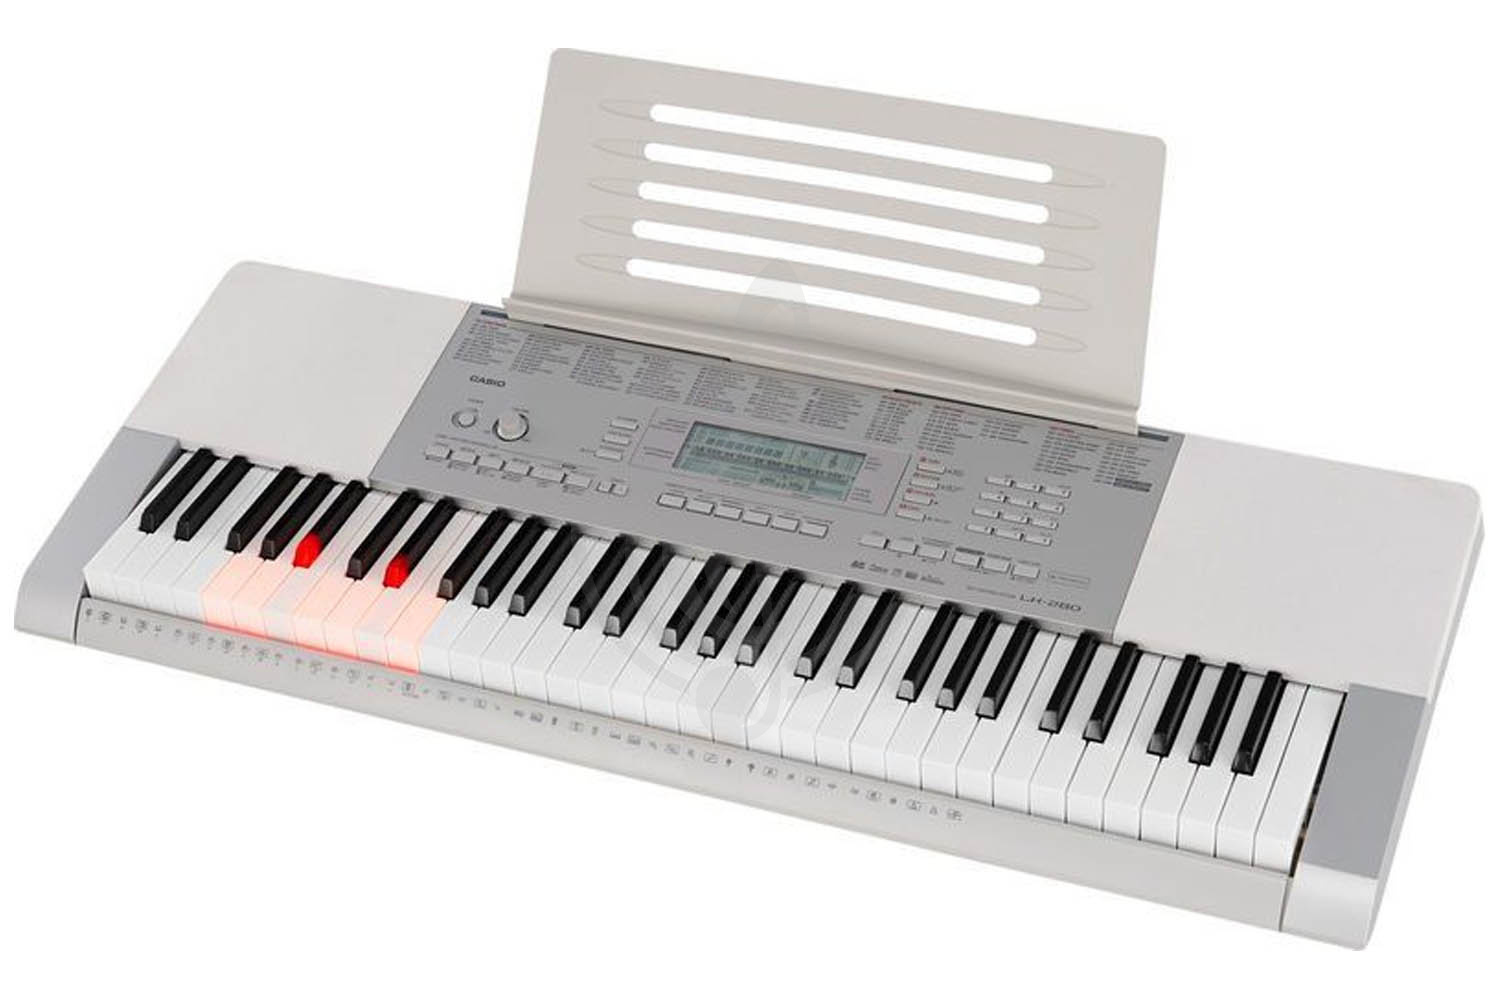 Домашний синтезатор Домашние синтезаторы Casio Casio LK-280 - цифровой синтезатор с подсветкой клавиш LK-280 - фото 1